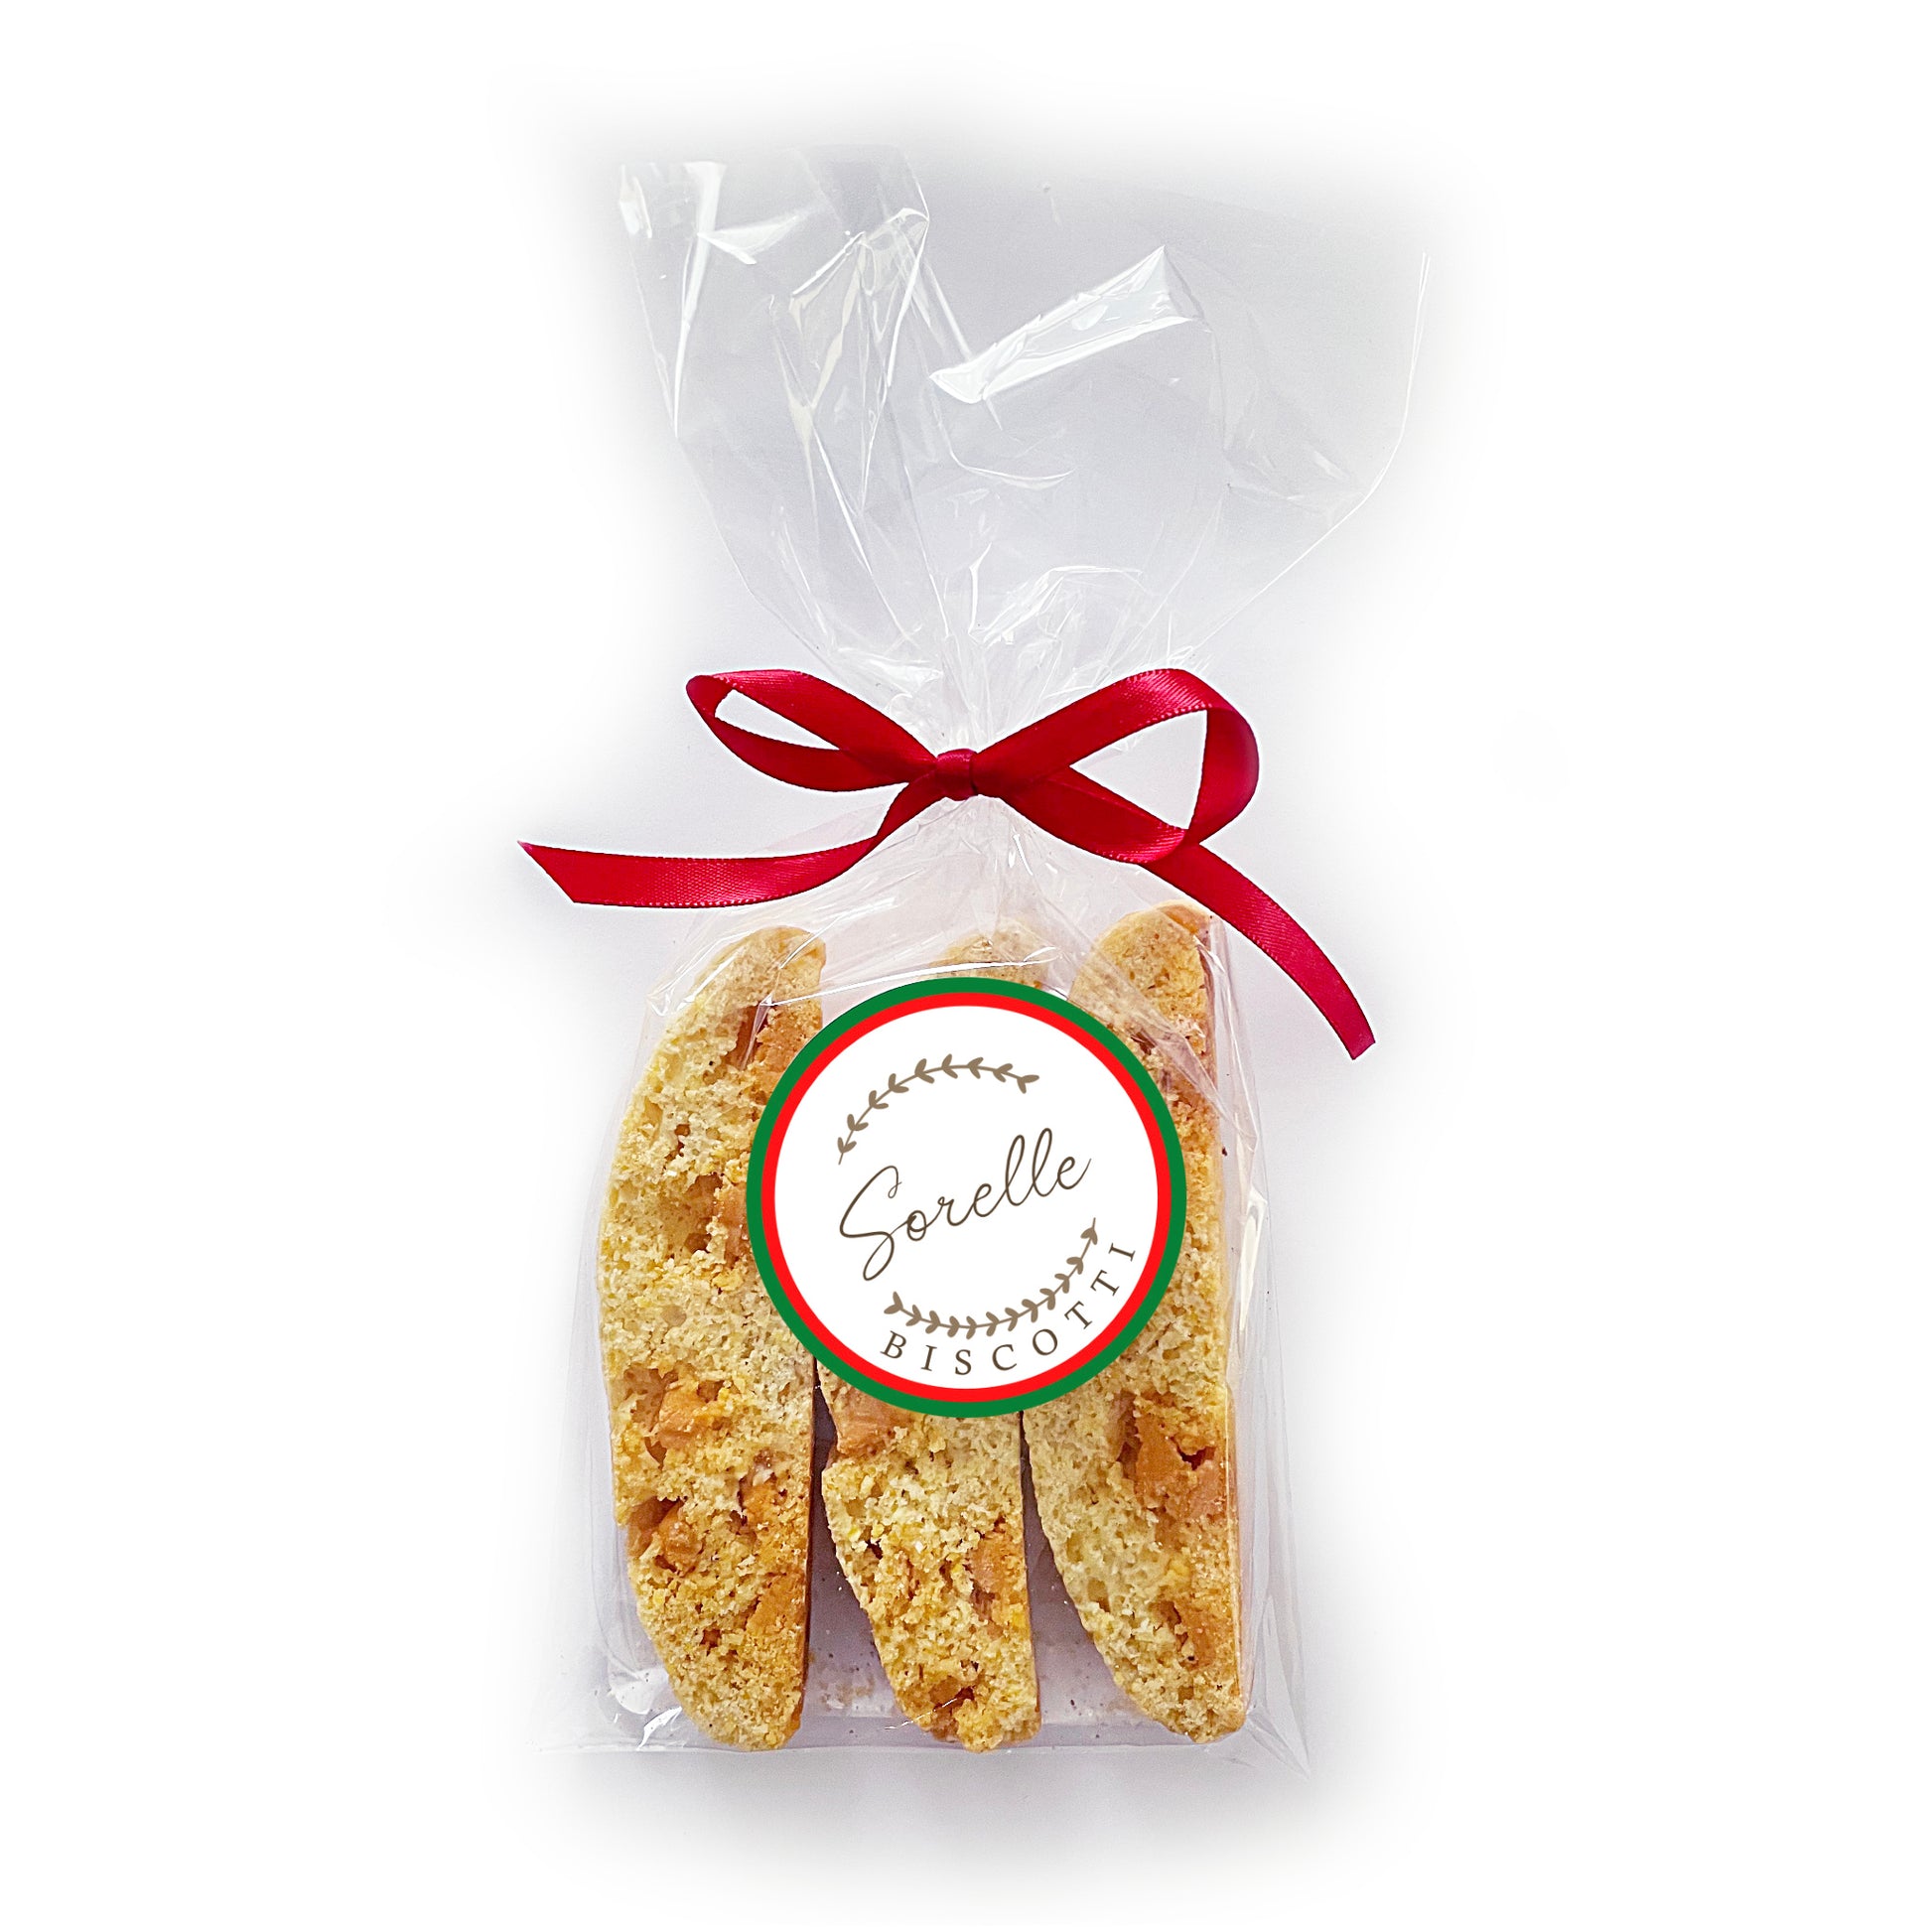 Sorelle Biscotti LLC 3 pack cornmeal butterscotch chip biscotti cookies